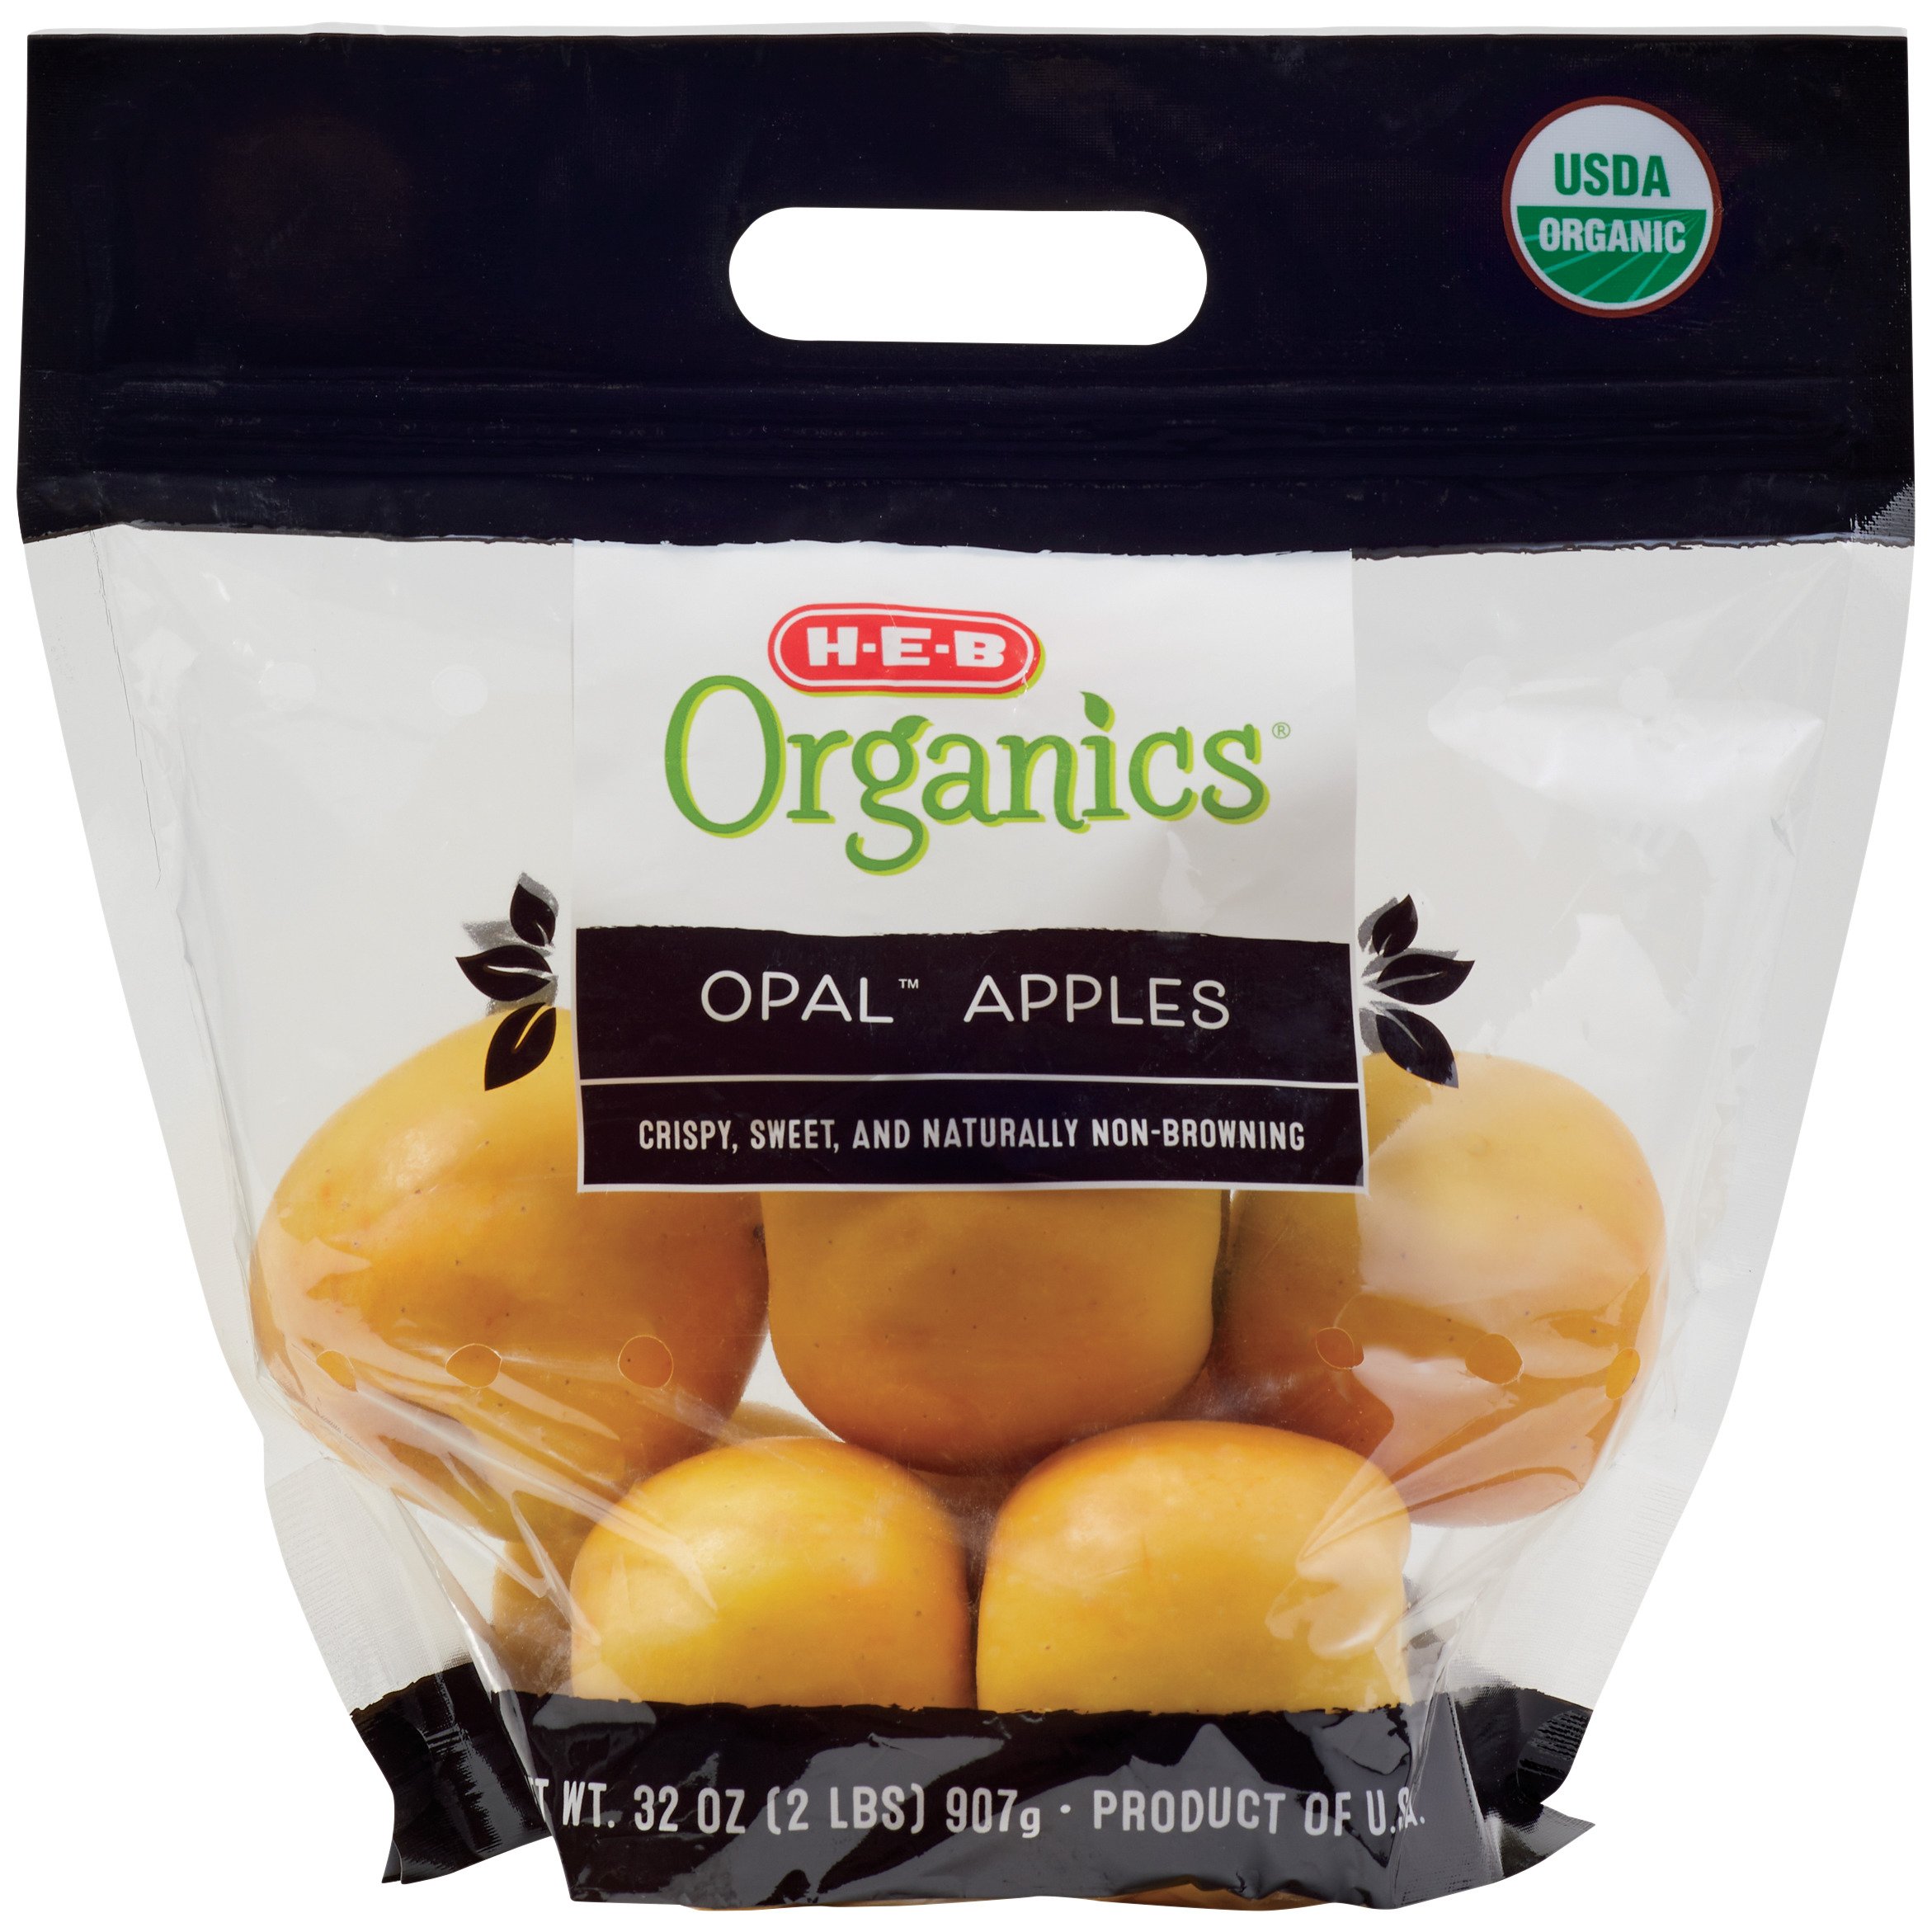 H-E-B Organics Fresh Opal Apples